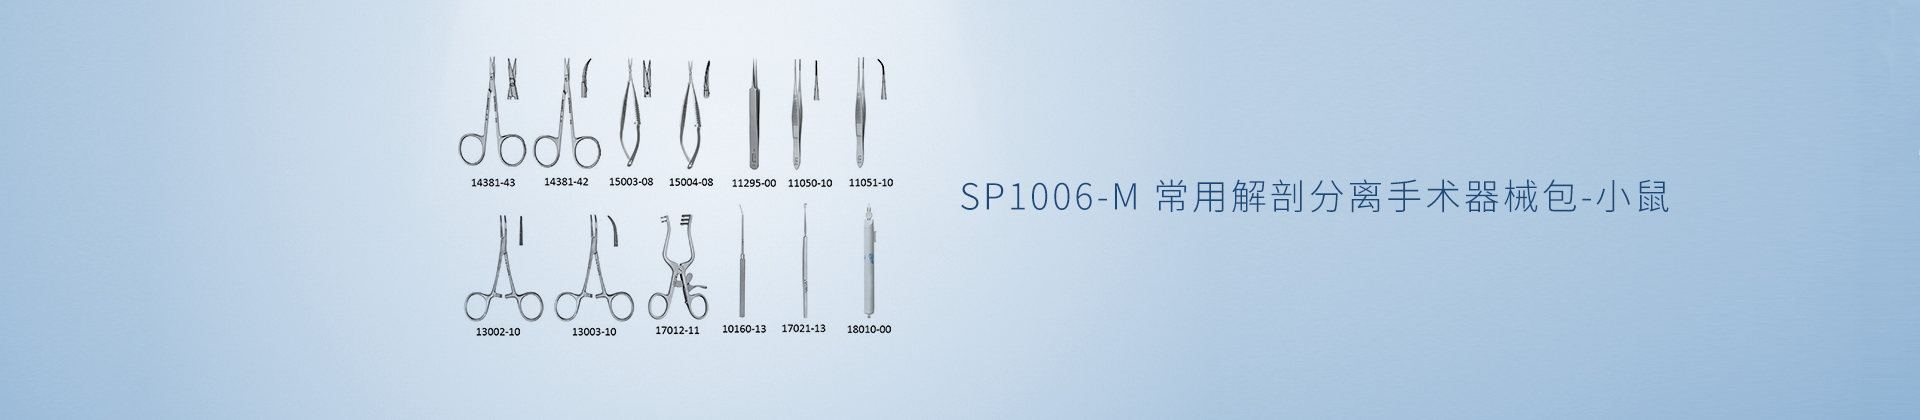 SP1006-M 常用解剖分离手术器械包-小鼠